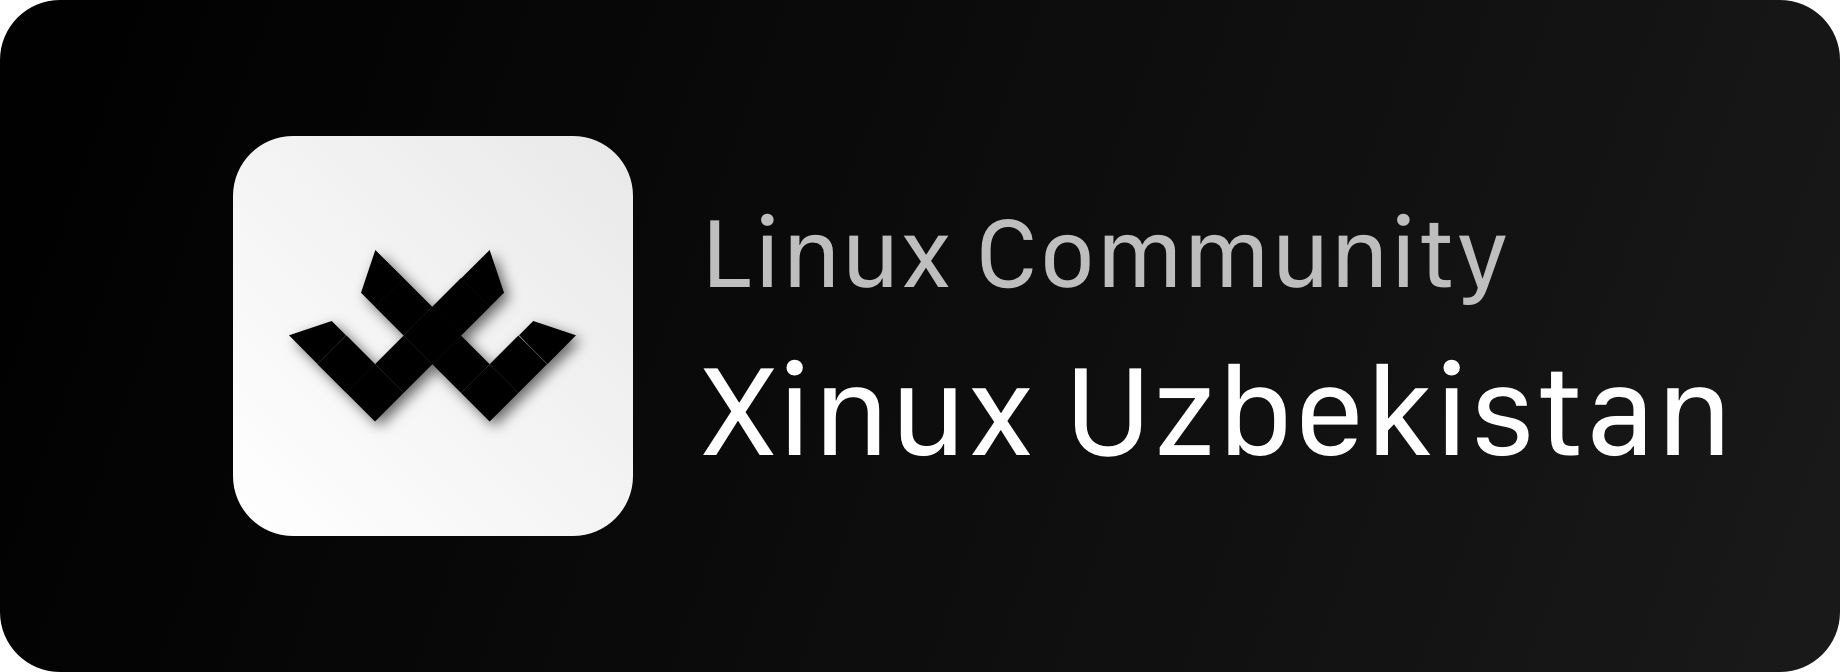 Xinux Community